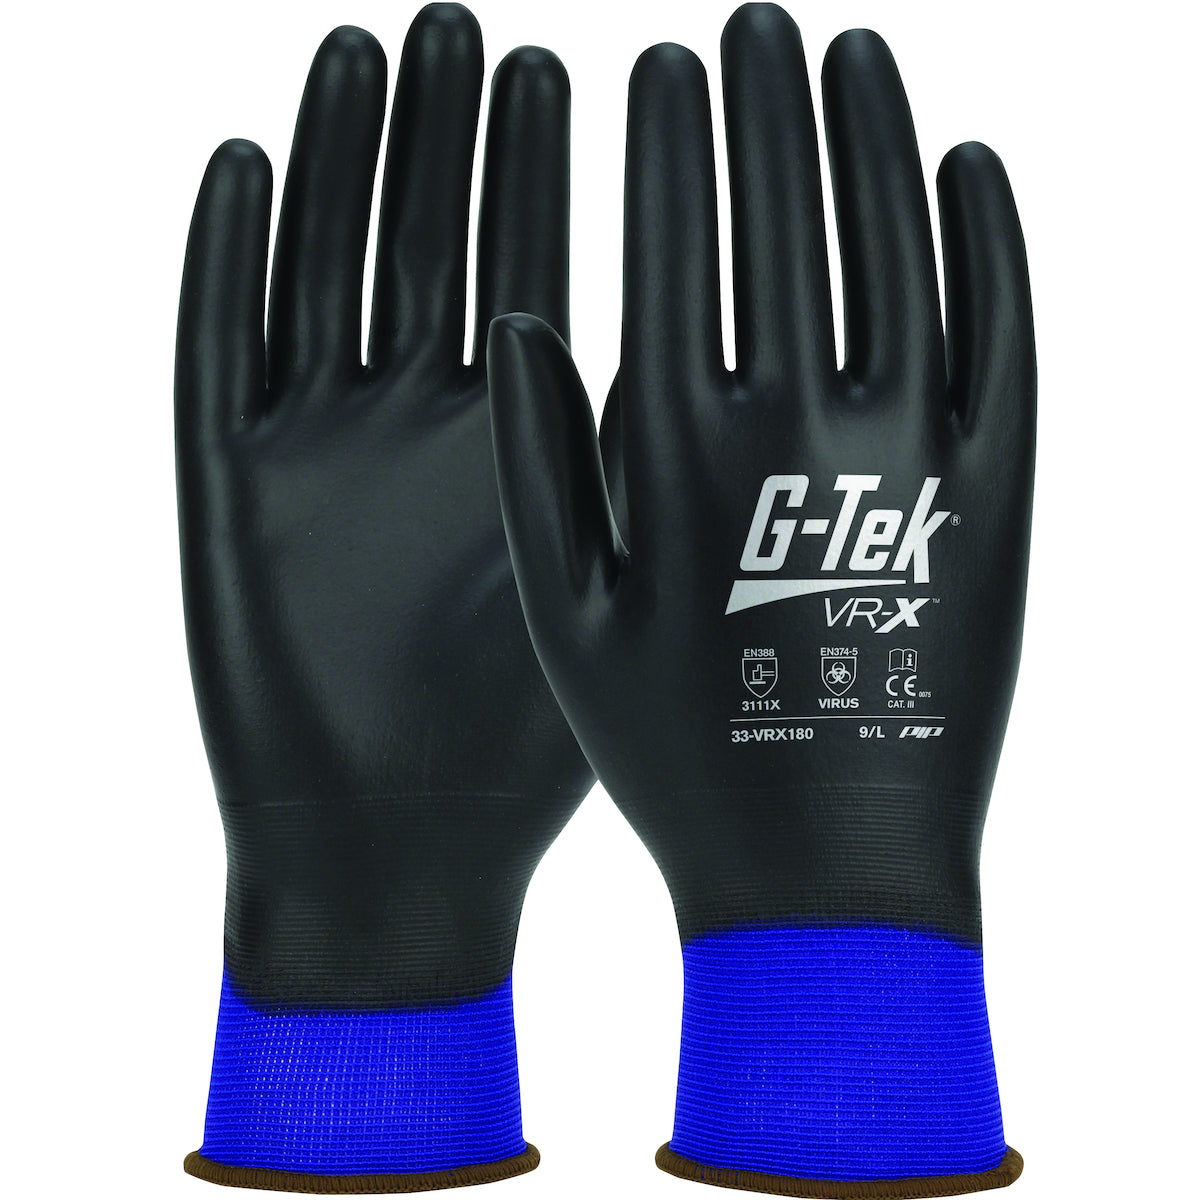 G-Tek VRX Waterproof Reusable Nitrile Gloves  Pack of 12